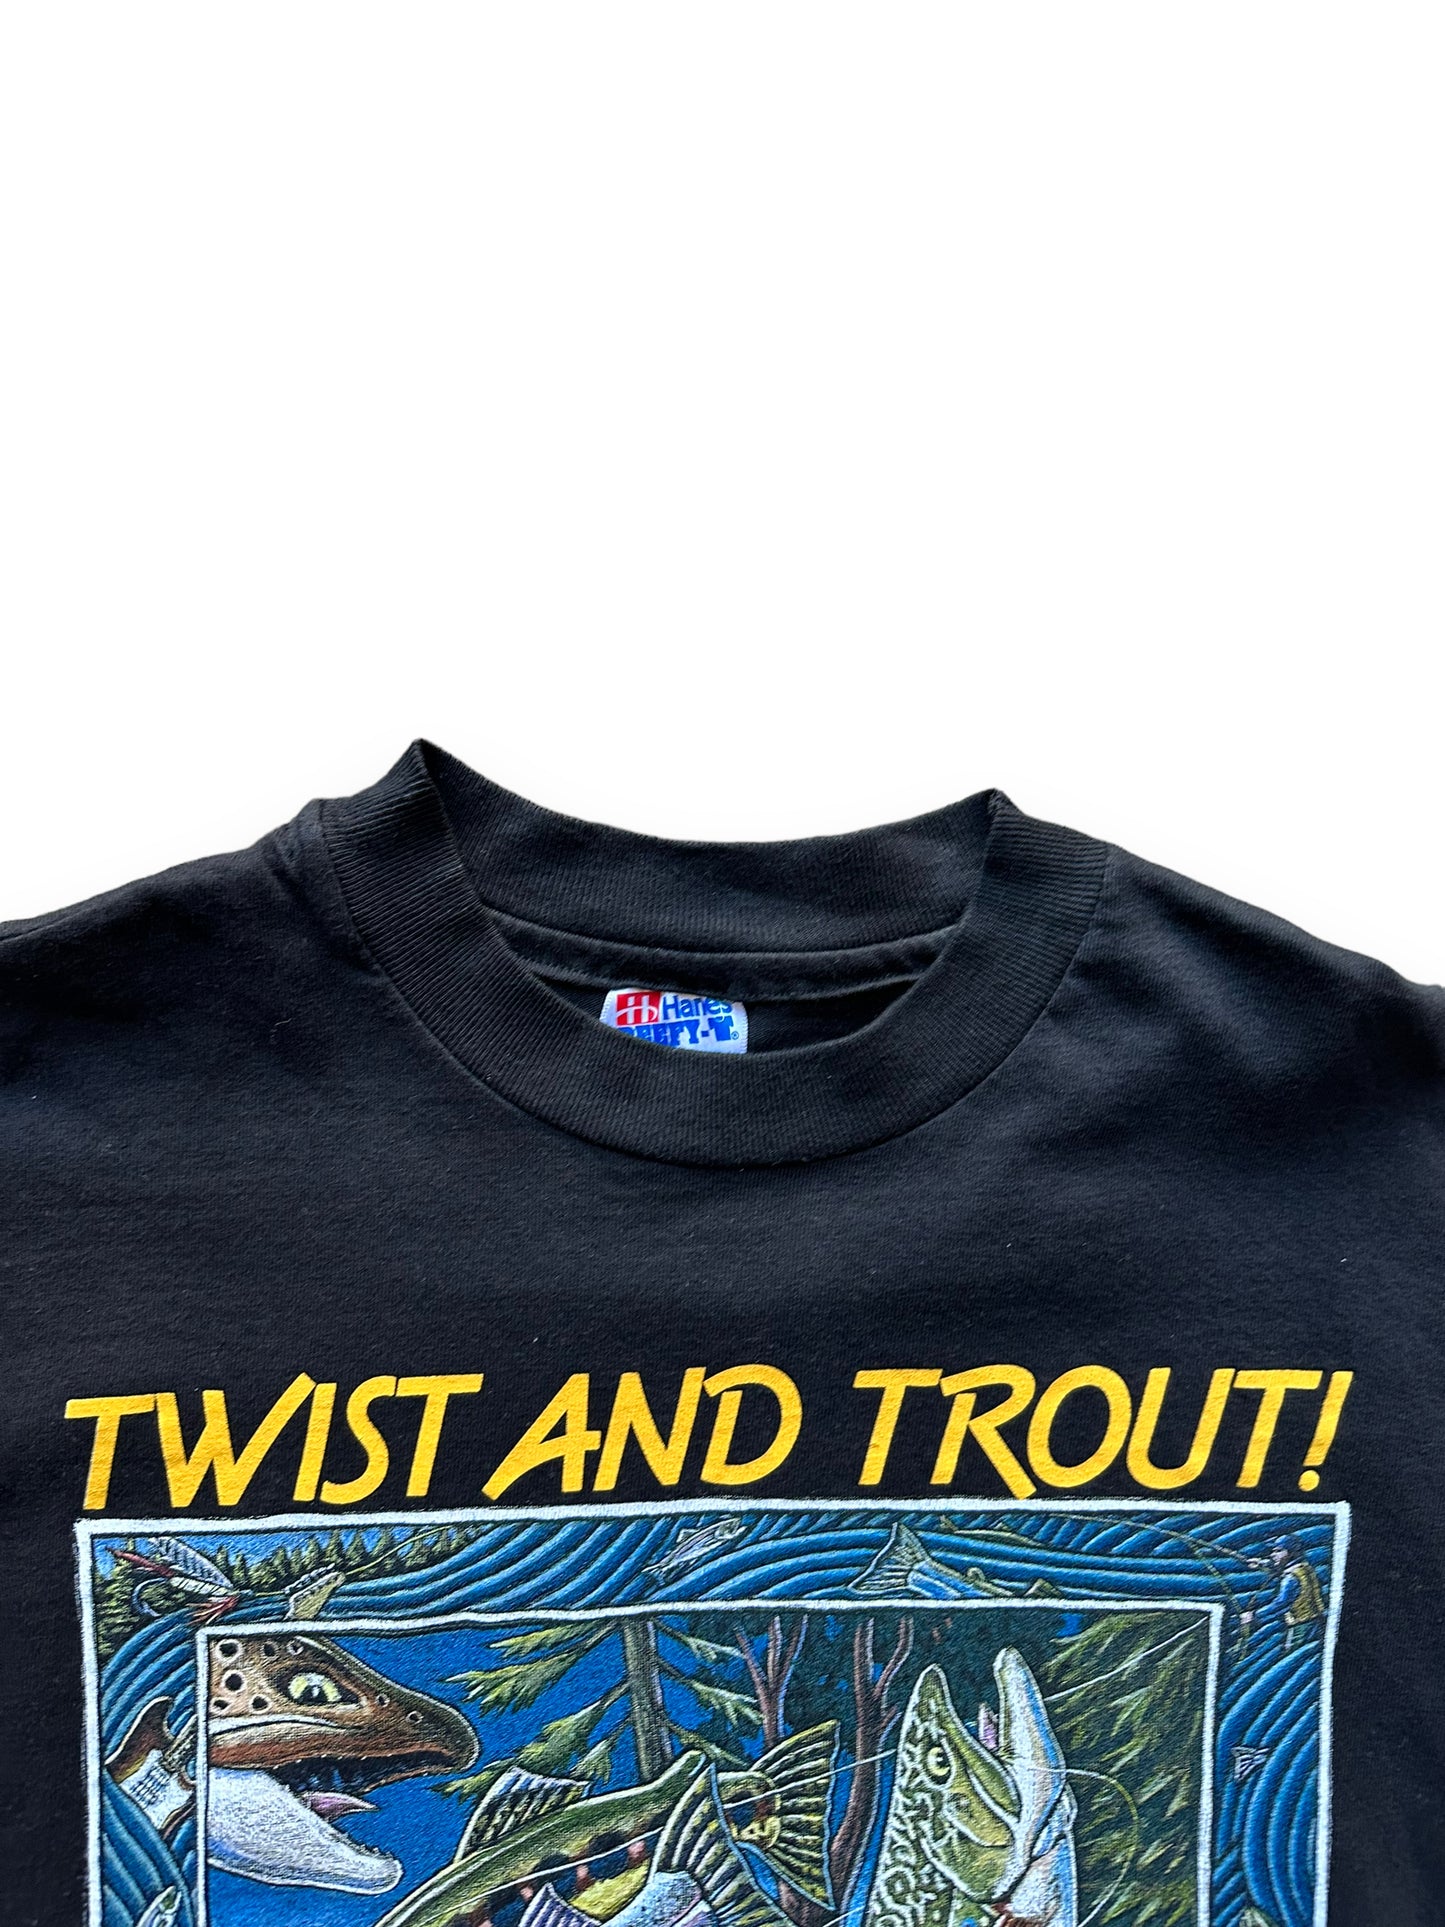 Collar of Vintage Ray Troll Twist and Trout Tee SZ L |  Vintage Fishing Tee Seattle | Barn Owl Vintage